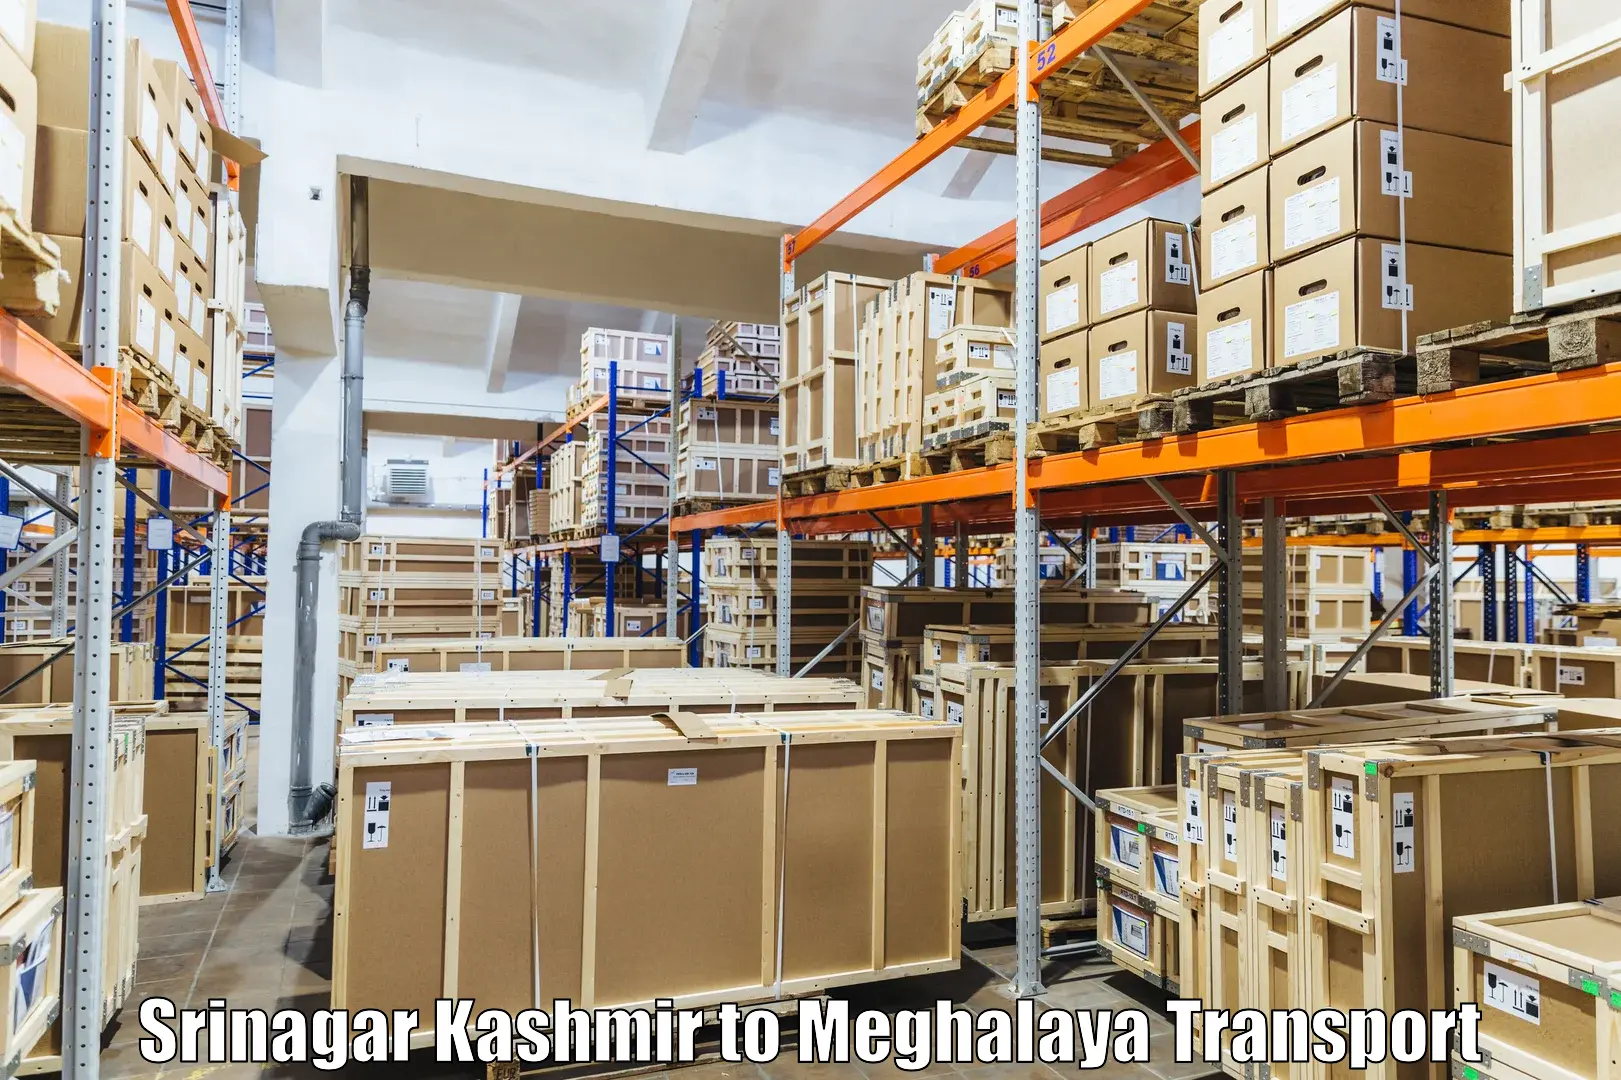 Furniture transport service Srinagar Kashmir to Meghalaya